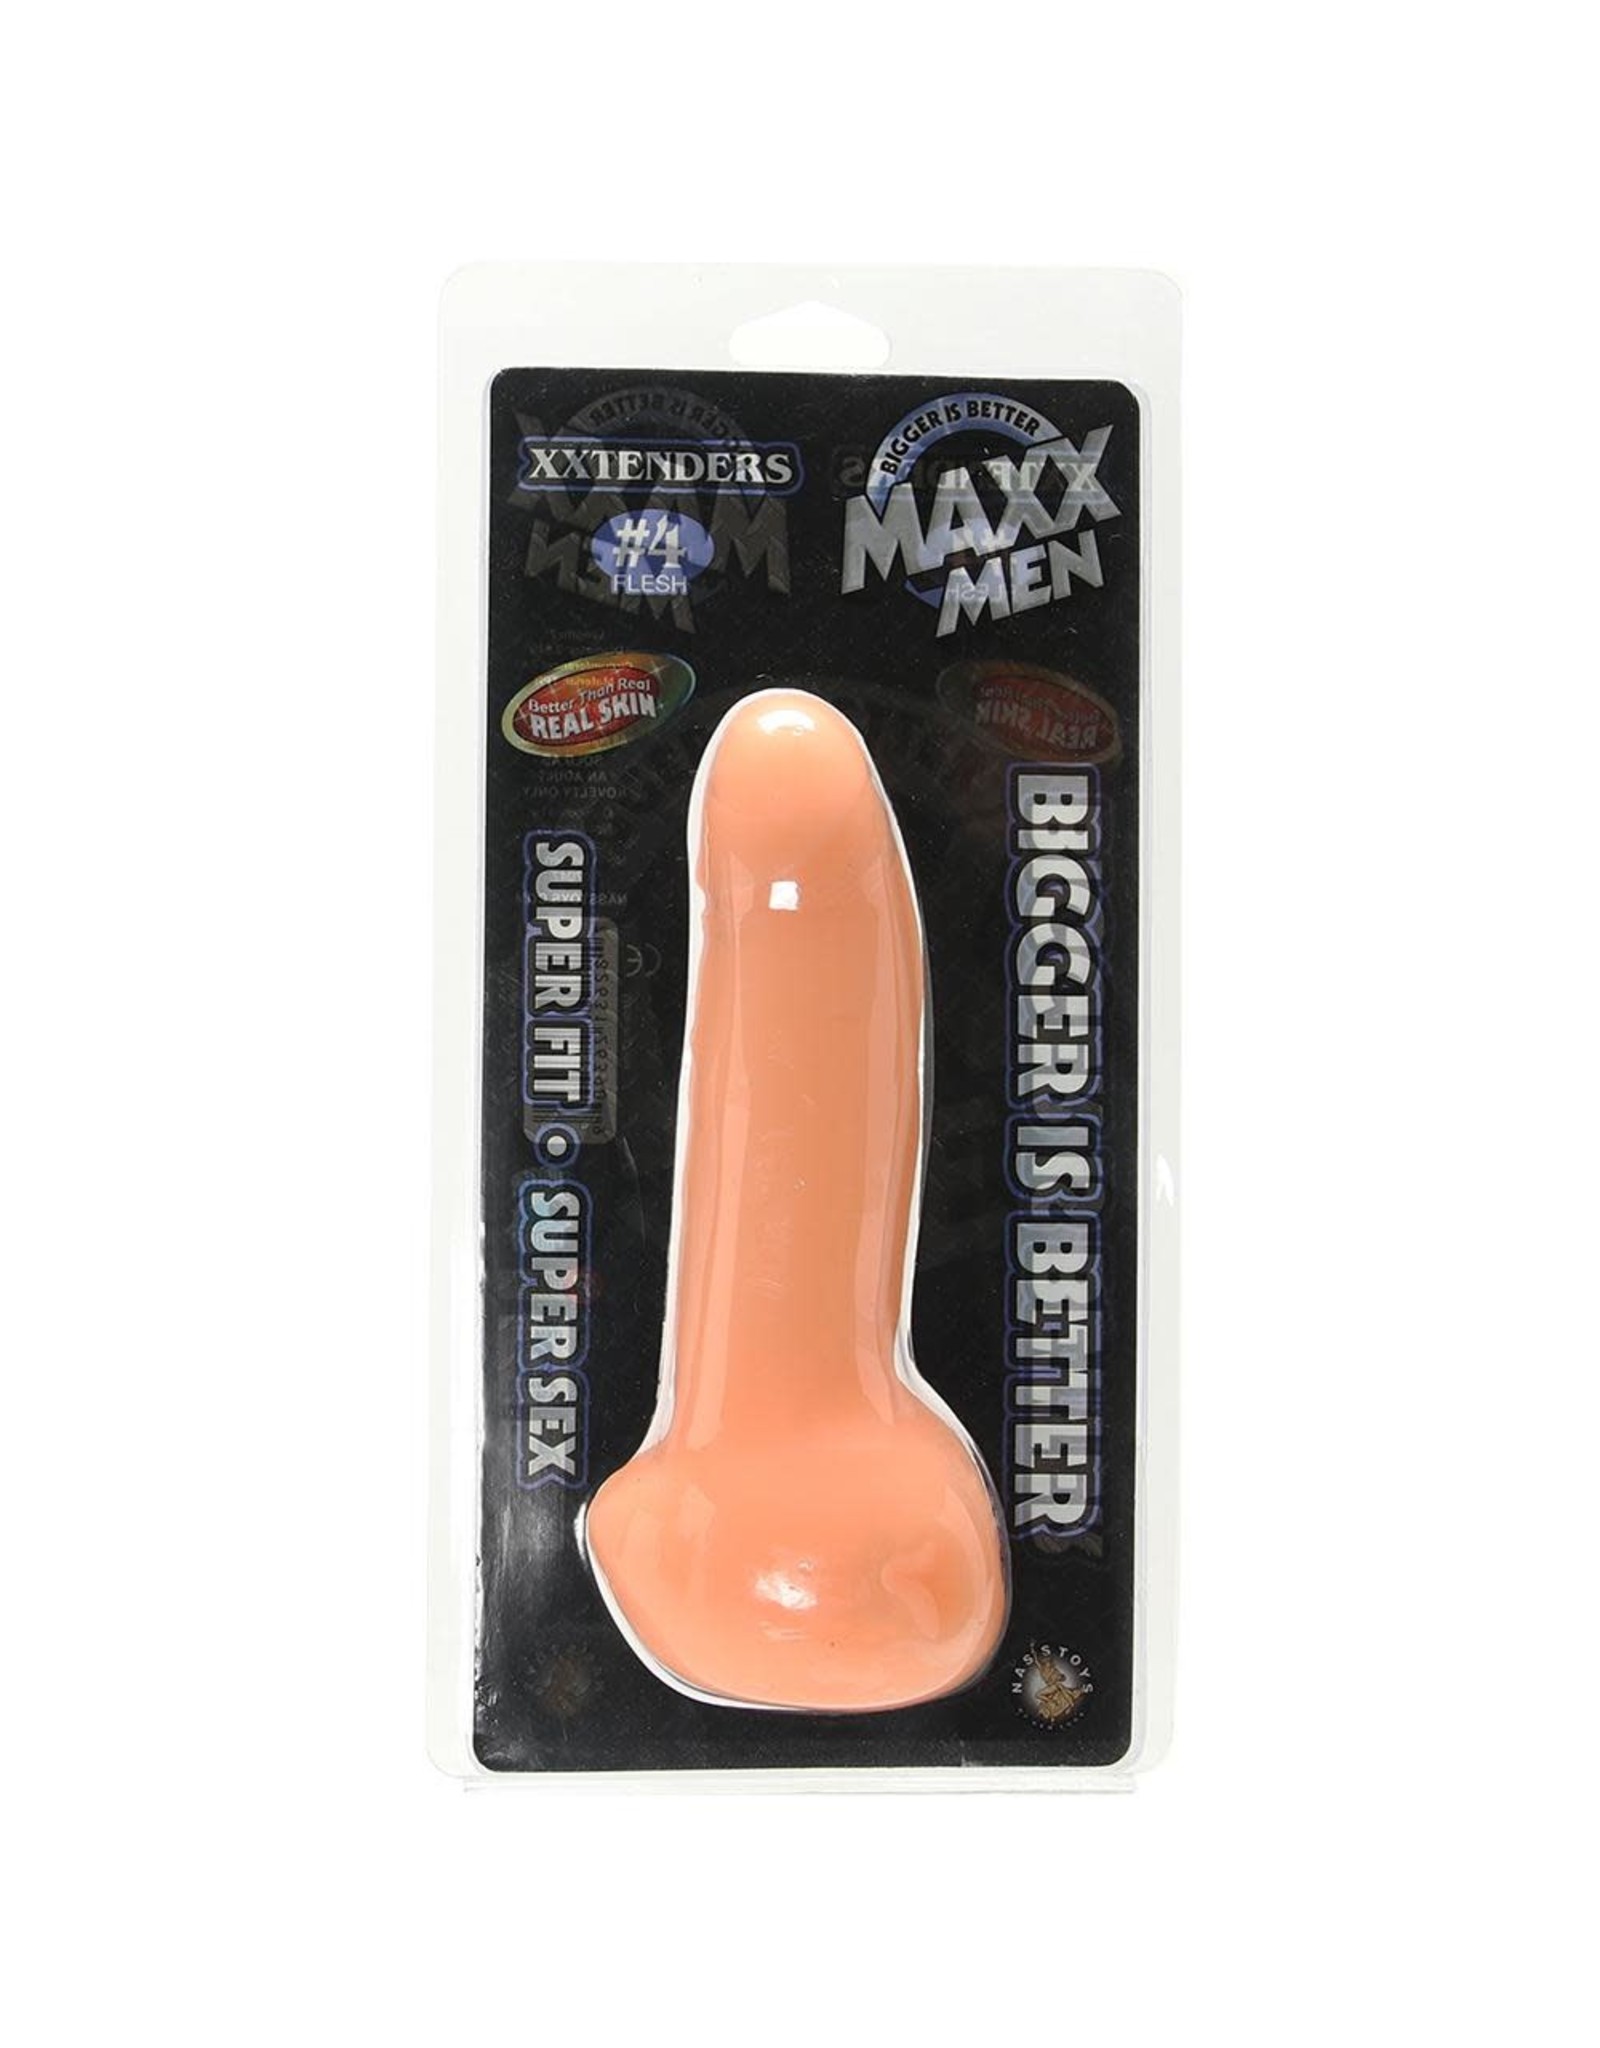 MAXX MEN XXTENDERS #4